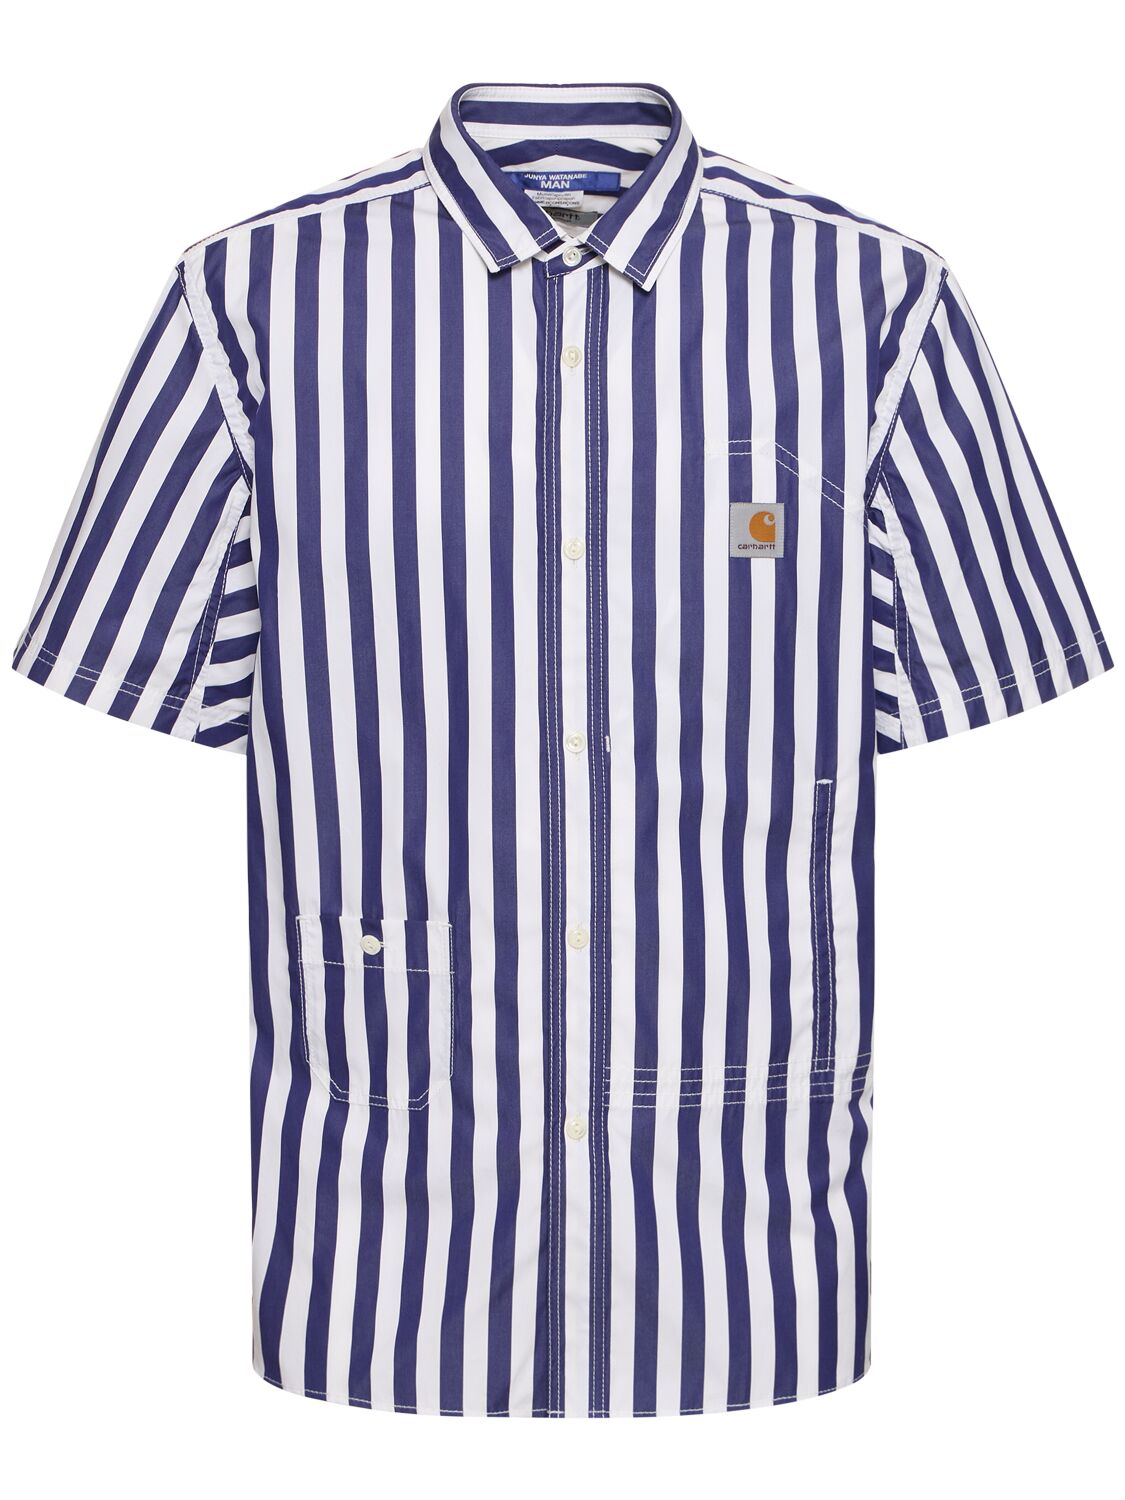 Image of Carhartt Striped Cotton Shirt